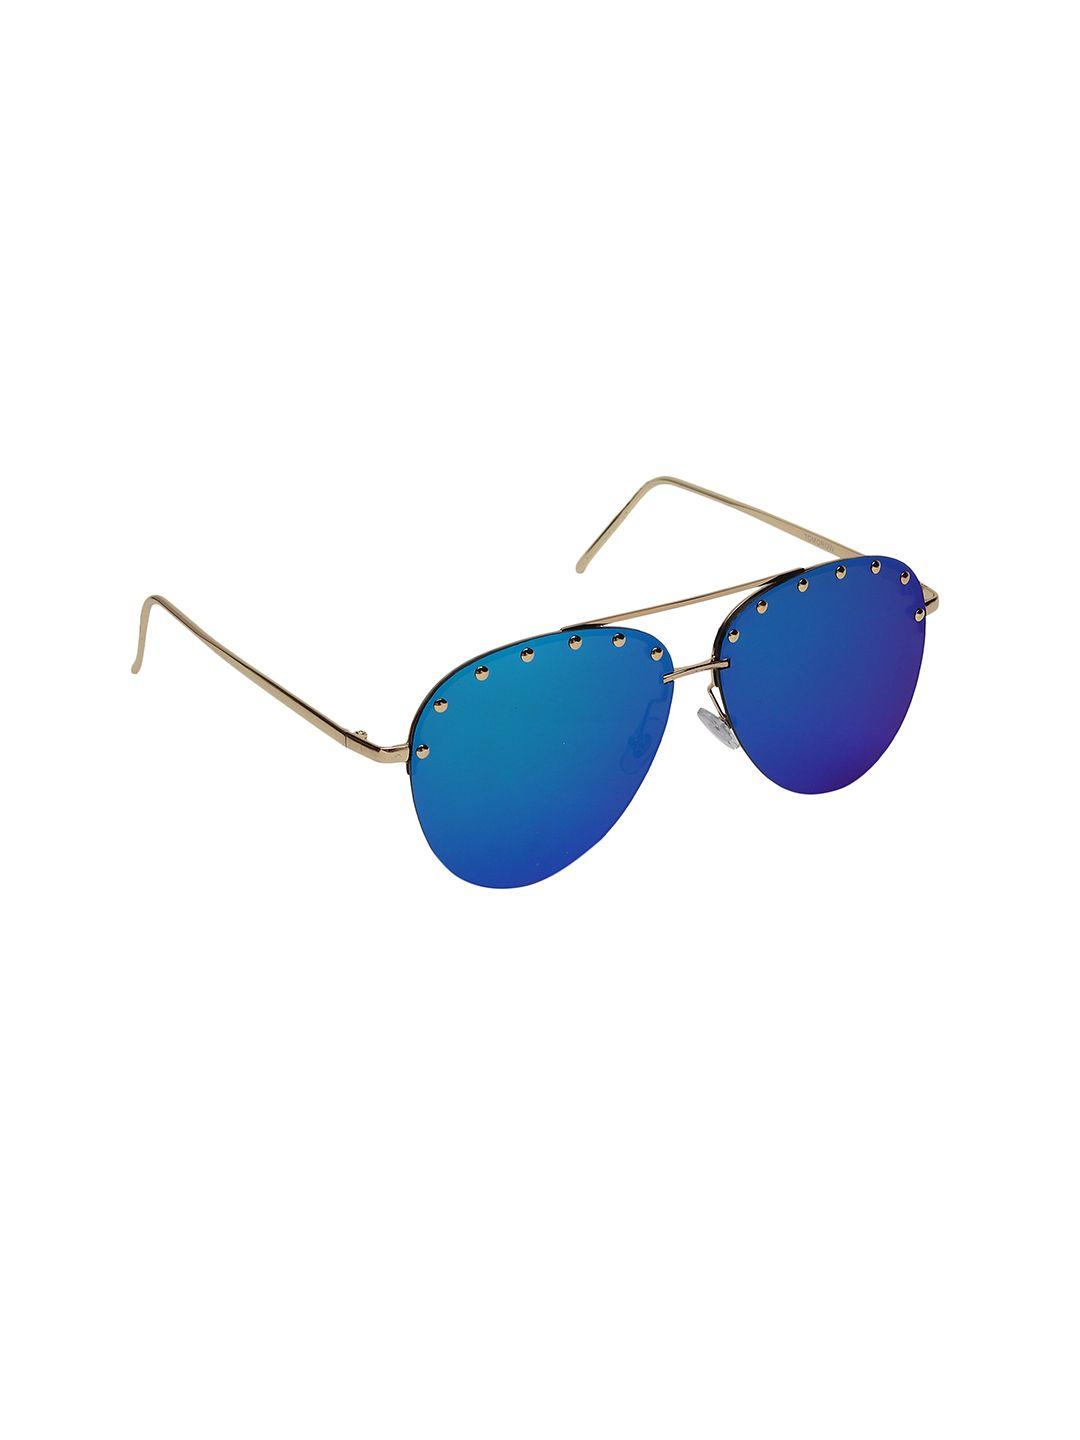 swiss design unisex green lens & gold-toned aviator sunglasses with uv protected lens